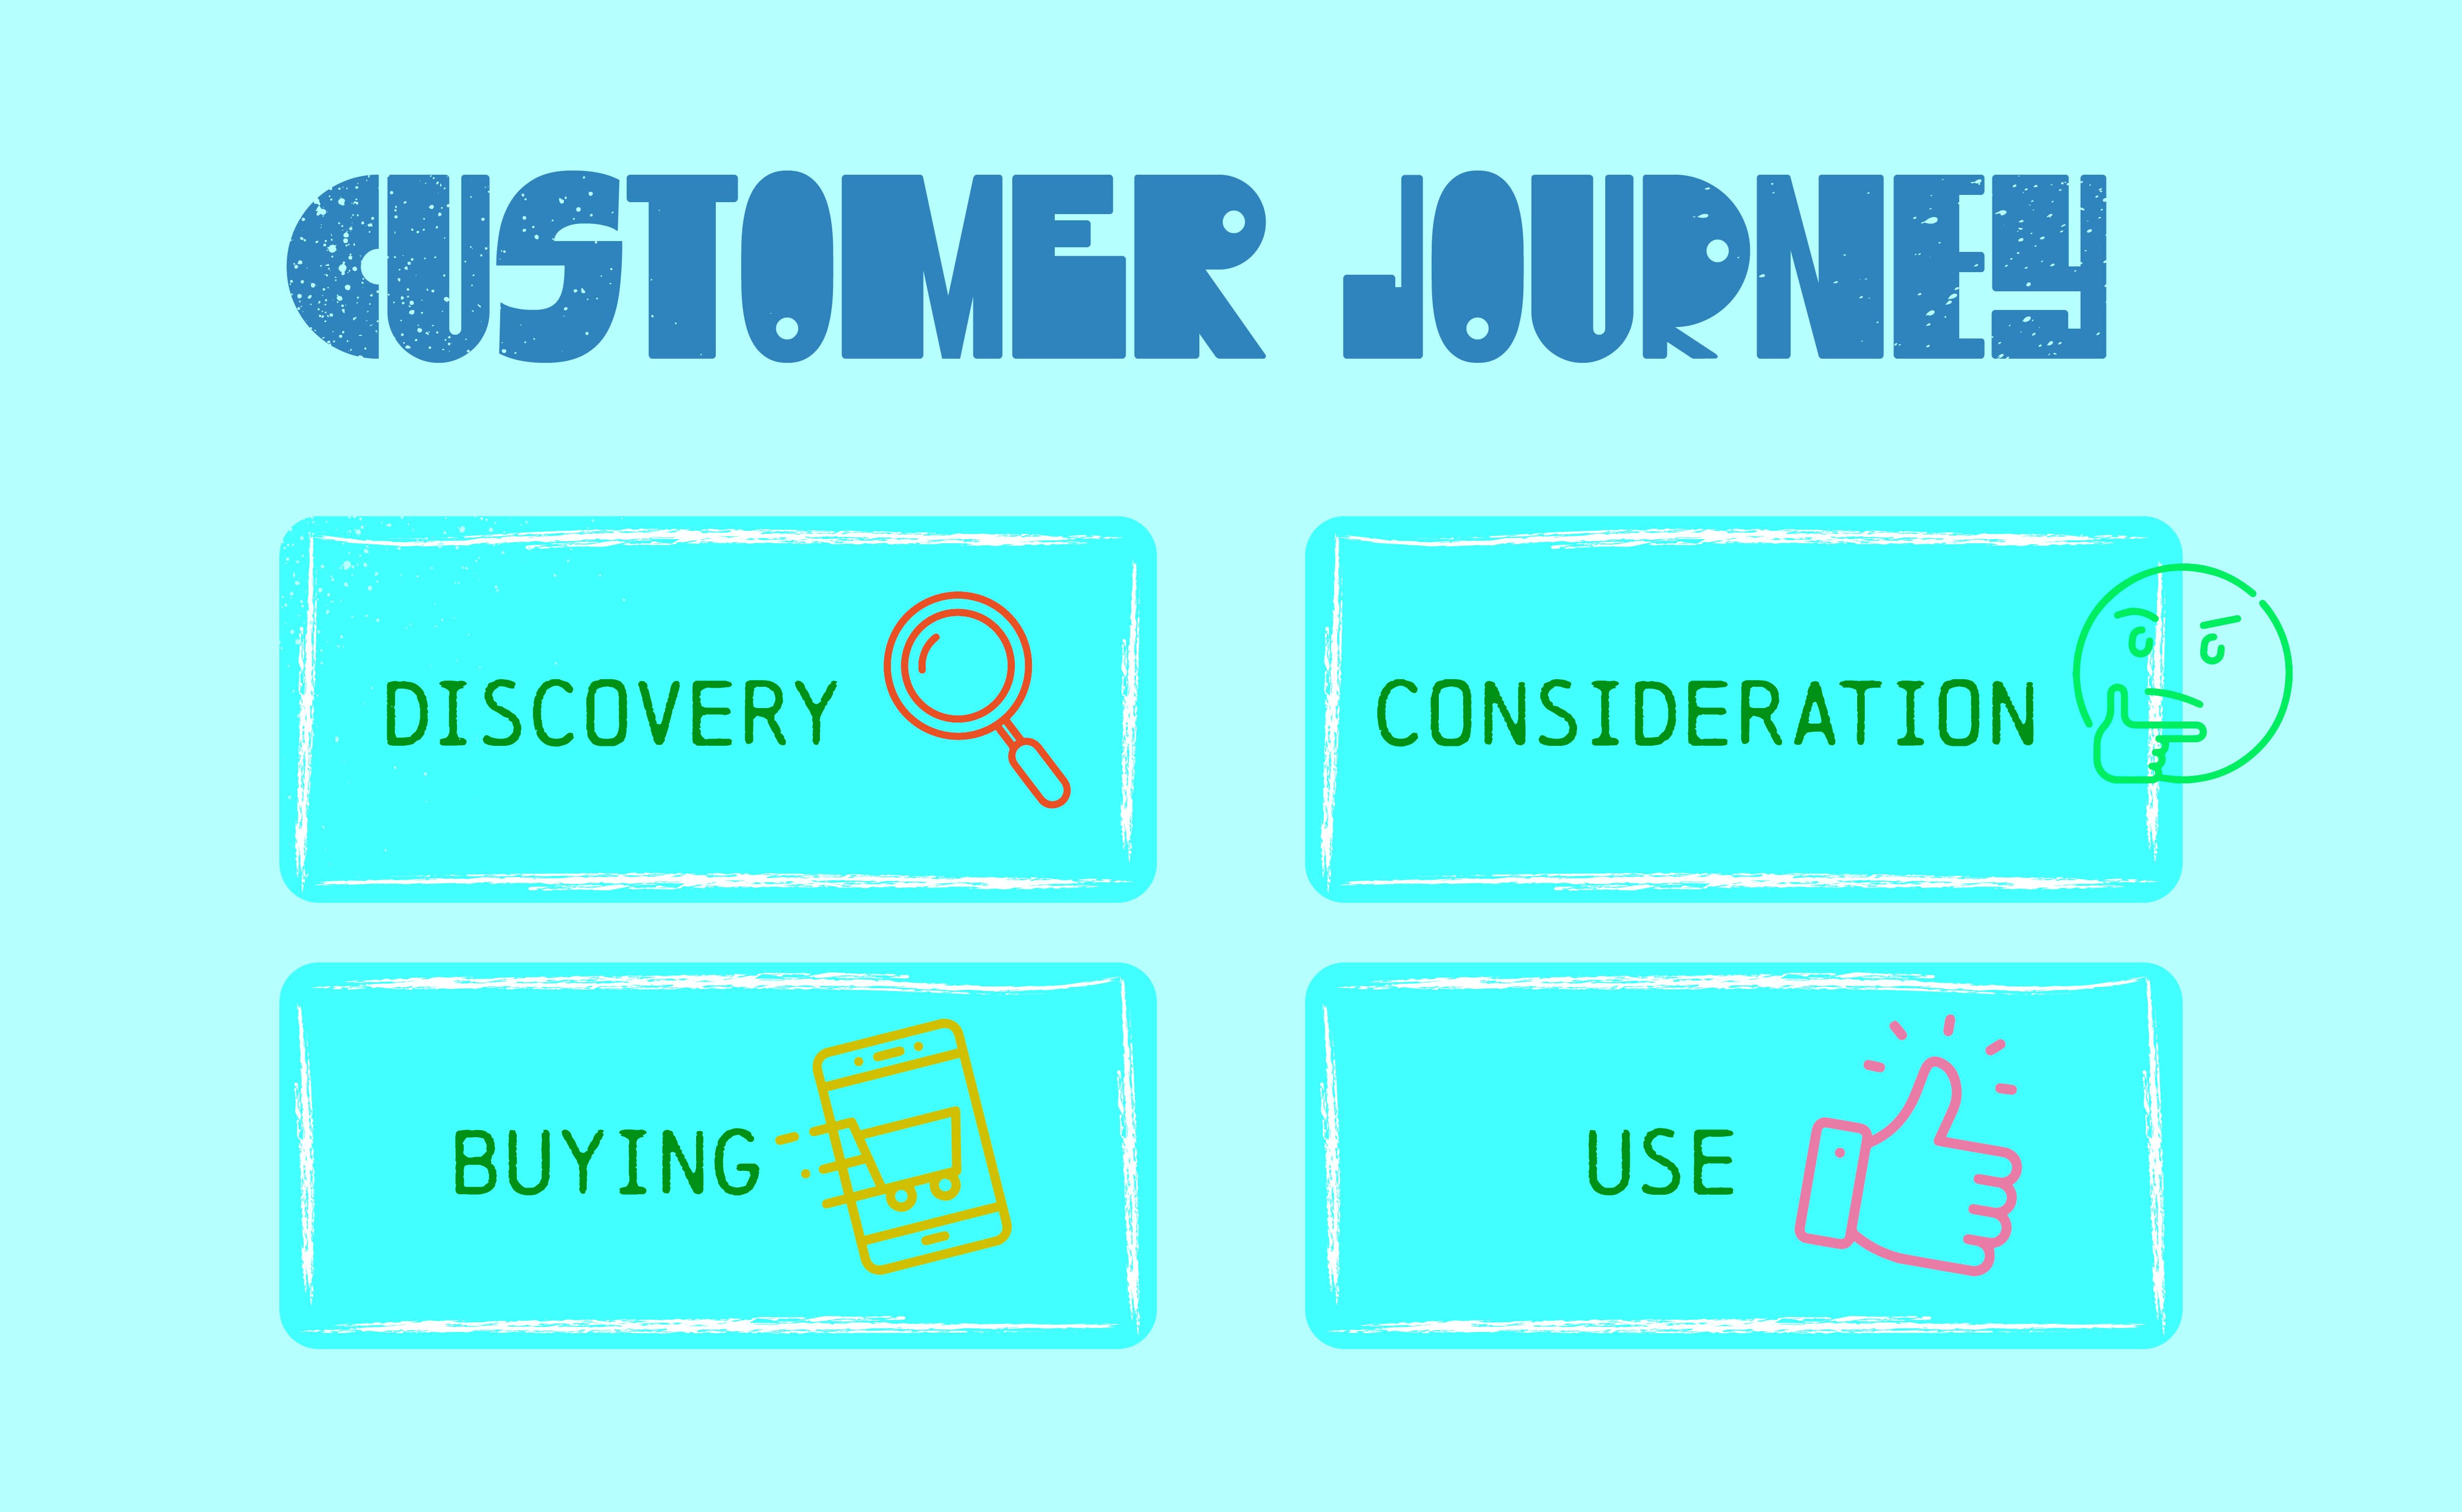 customer journey map split into 4 categories